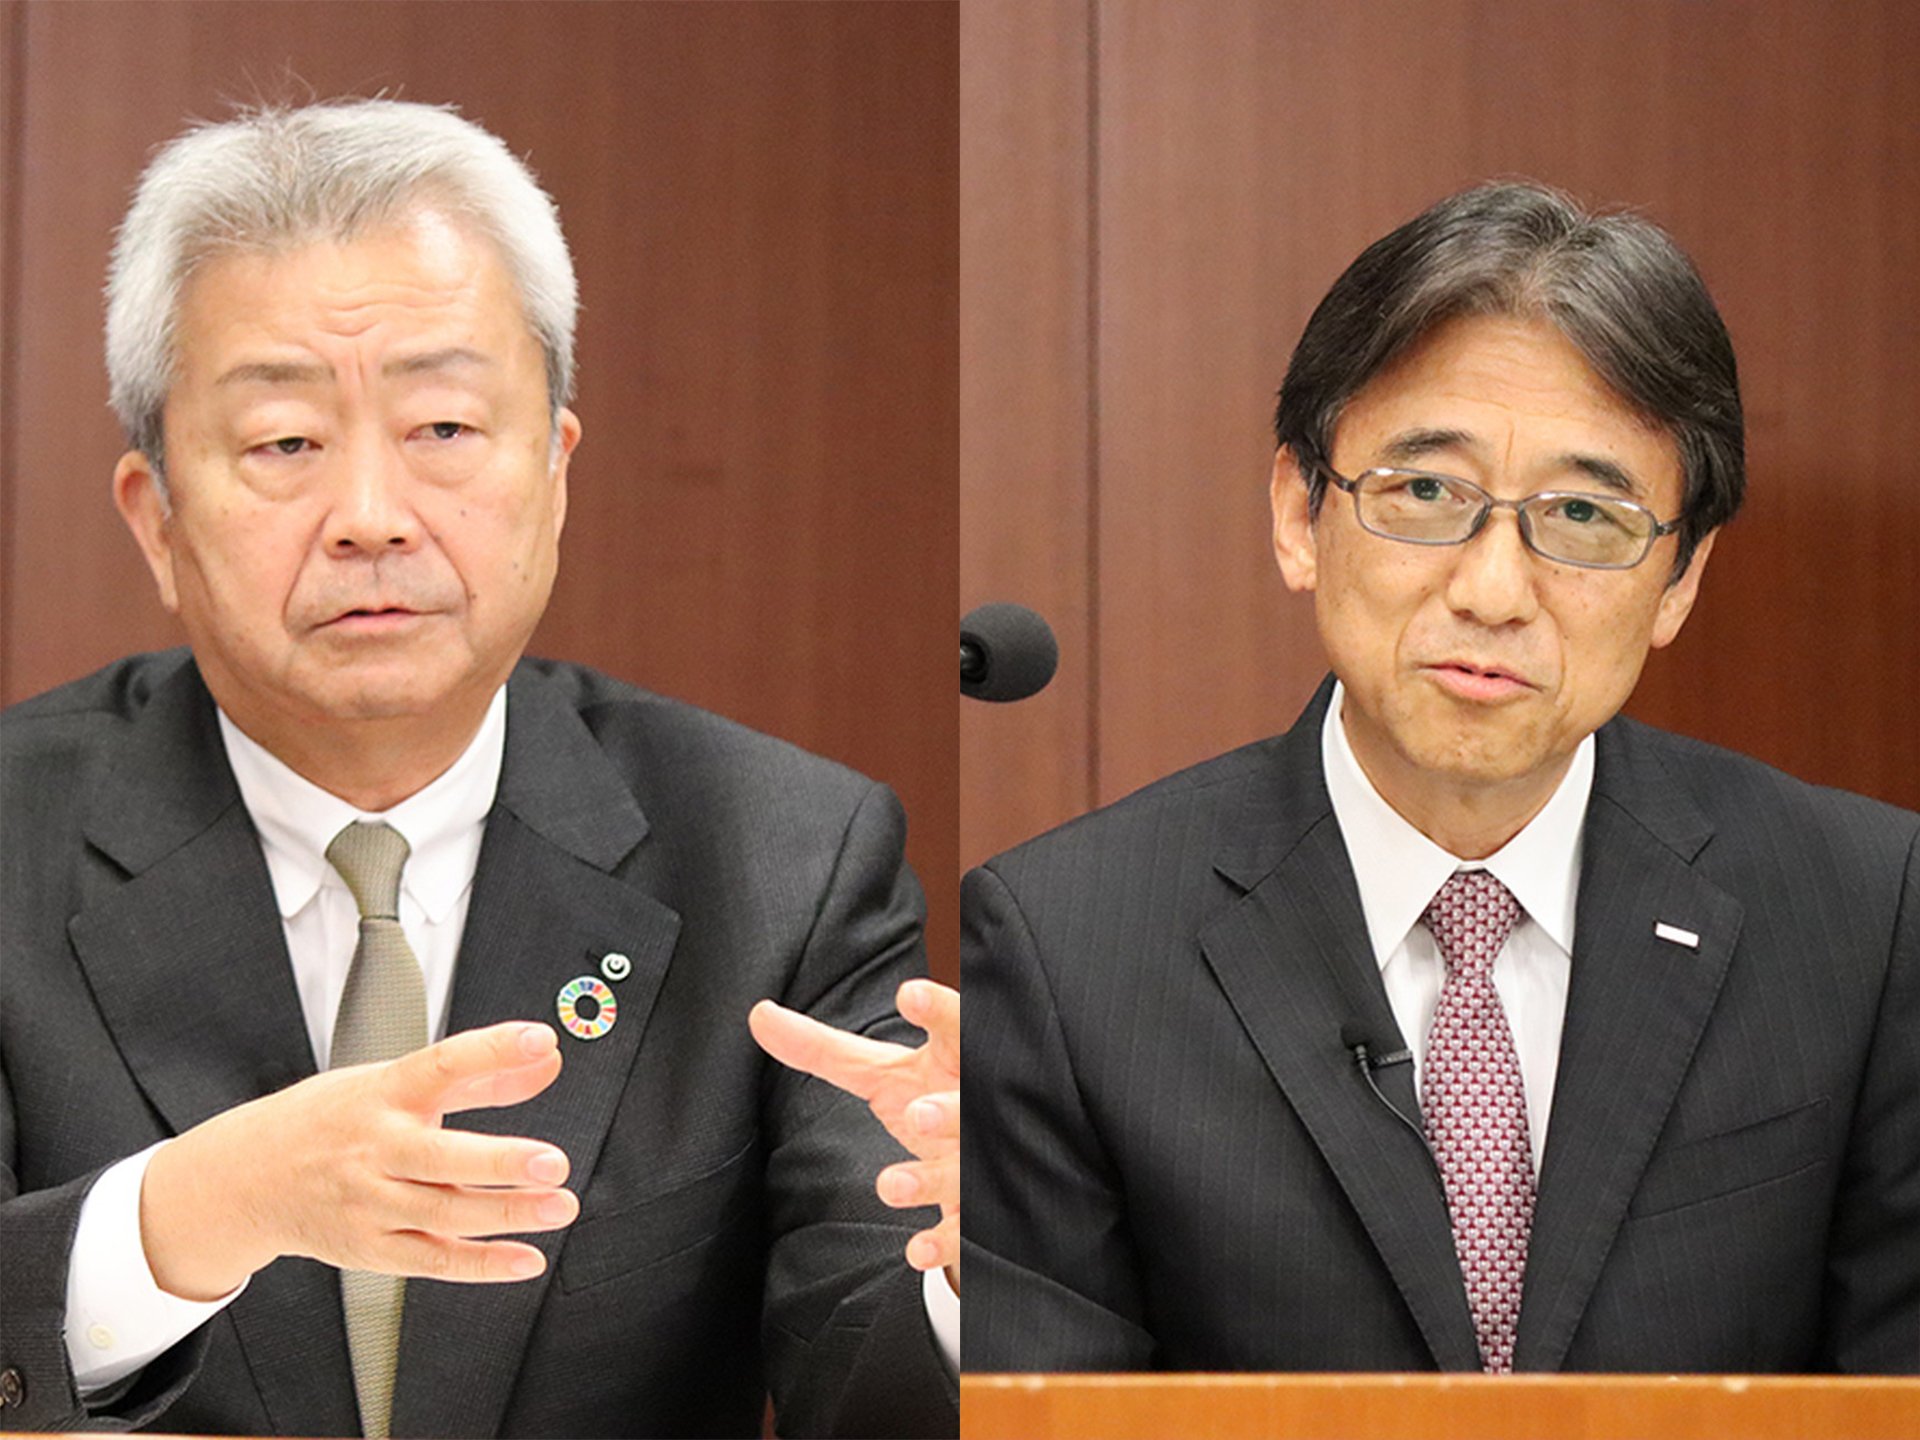 NTT代表取締役社長 澤田純氏（左）とNTTドコモ代表取締役社長 吉澤和宏氏